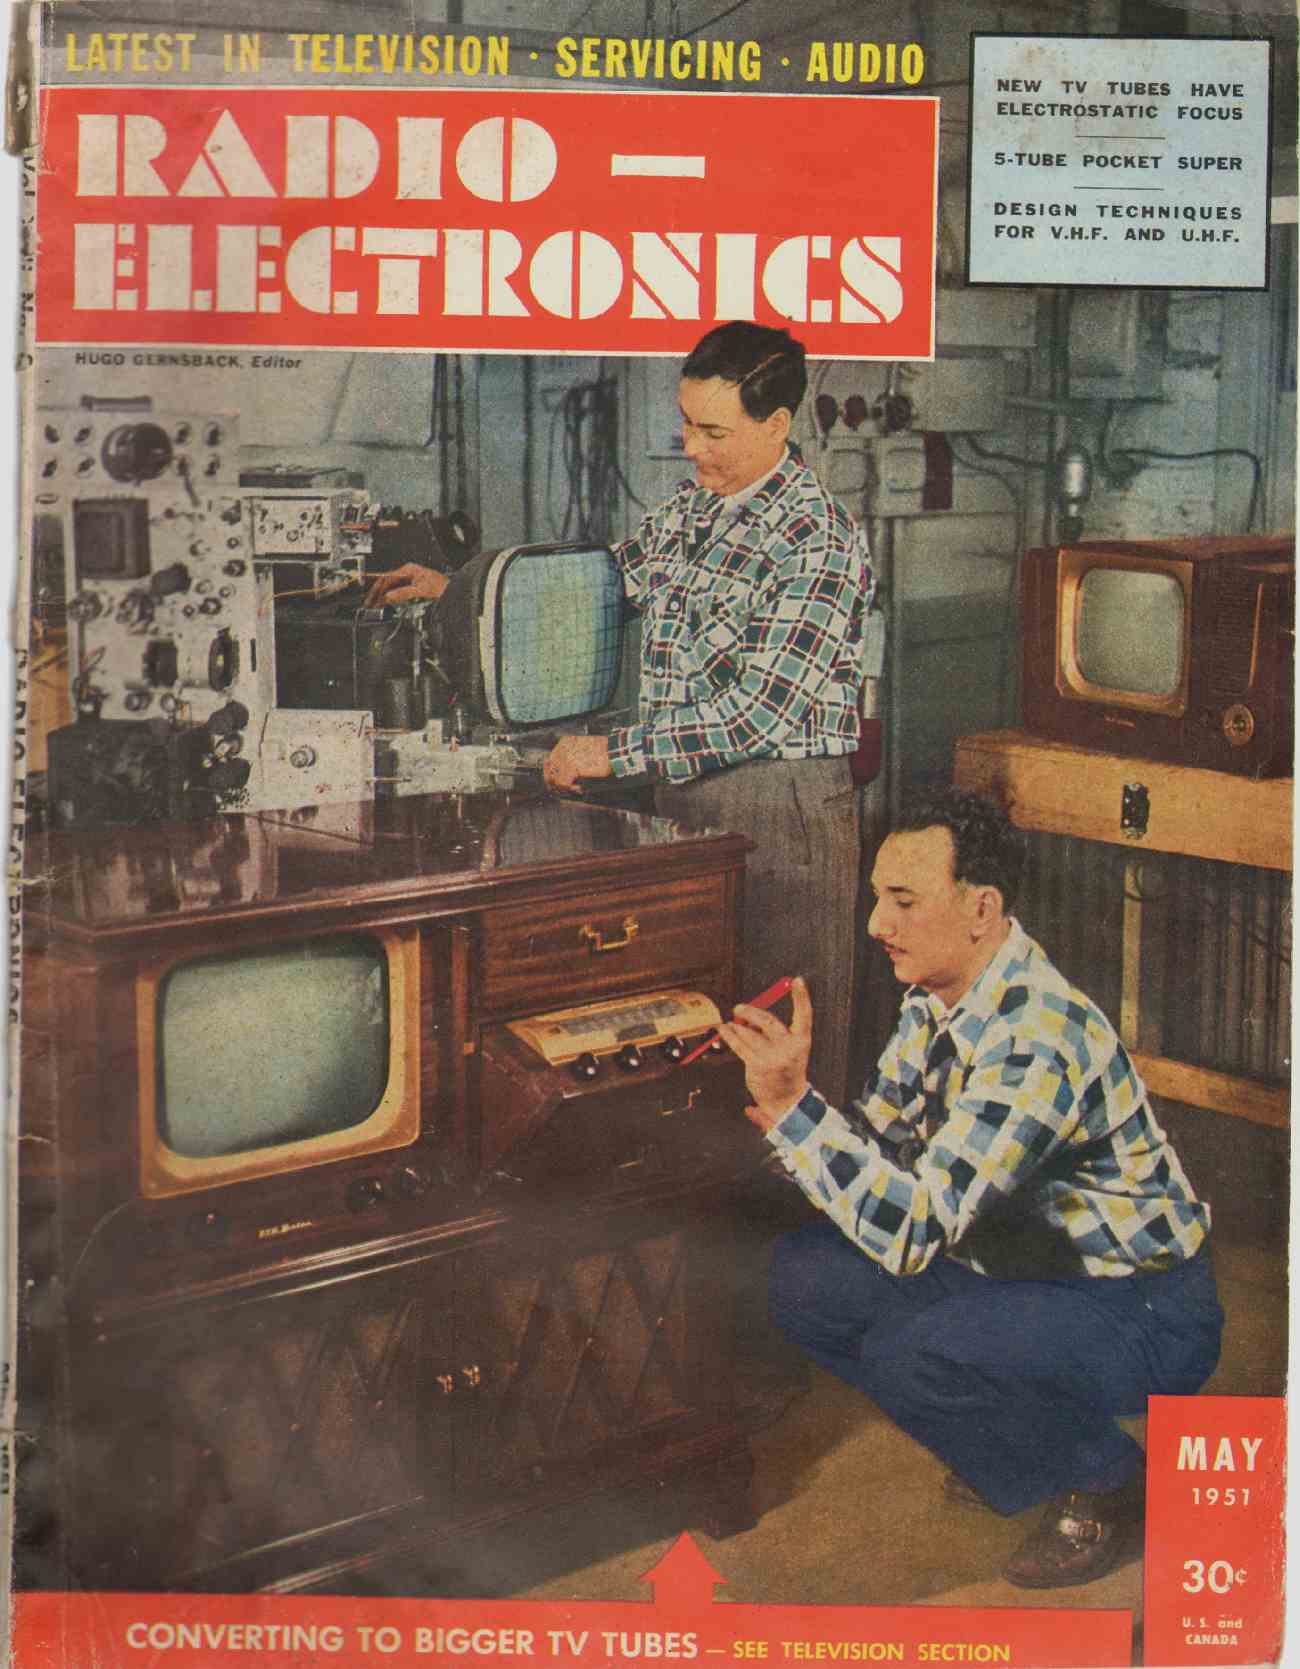 Gernsback, Hugo; editor - RADIO - ELECTRONICS May 1951 Volume Xxii, No. 8